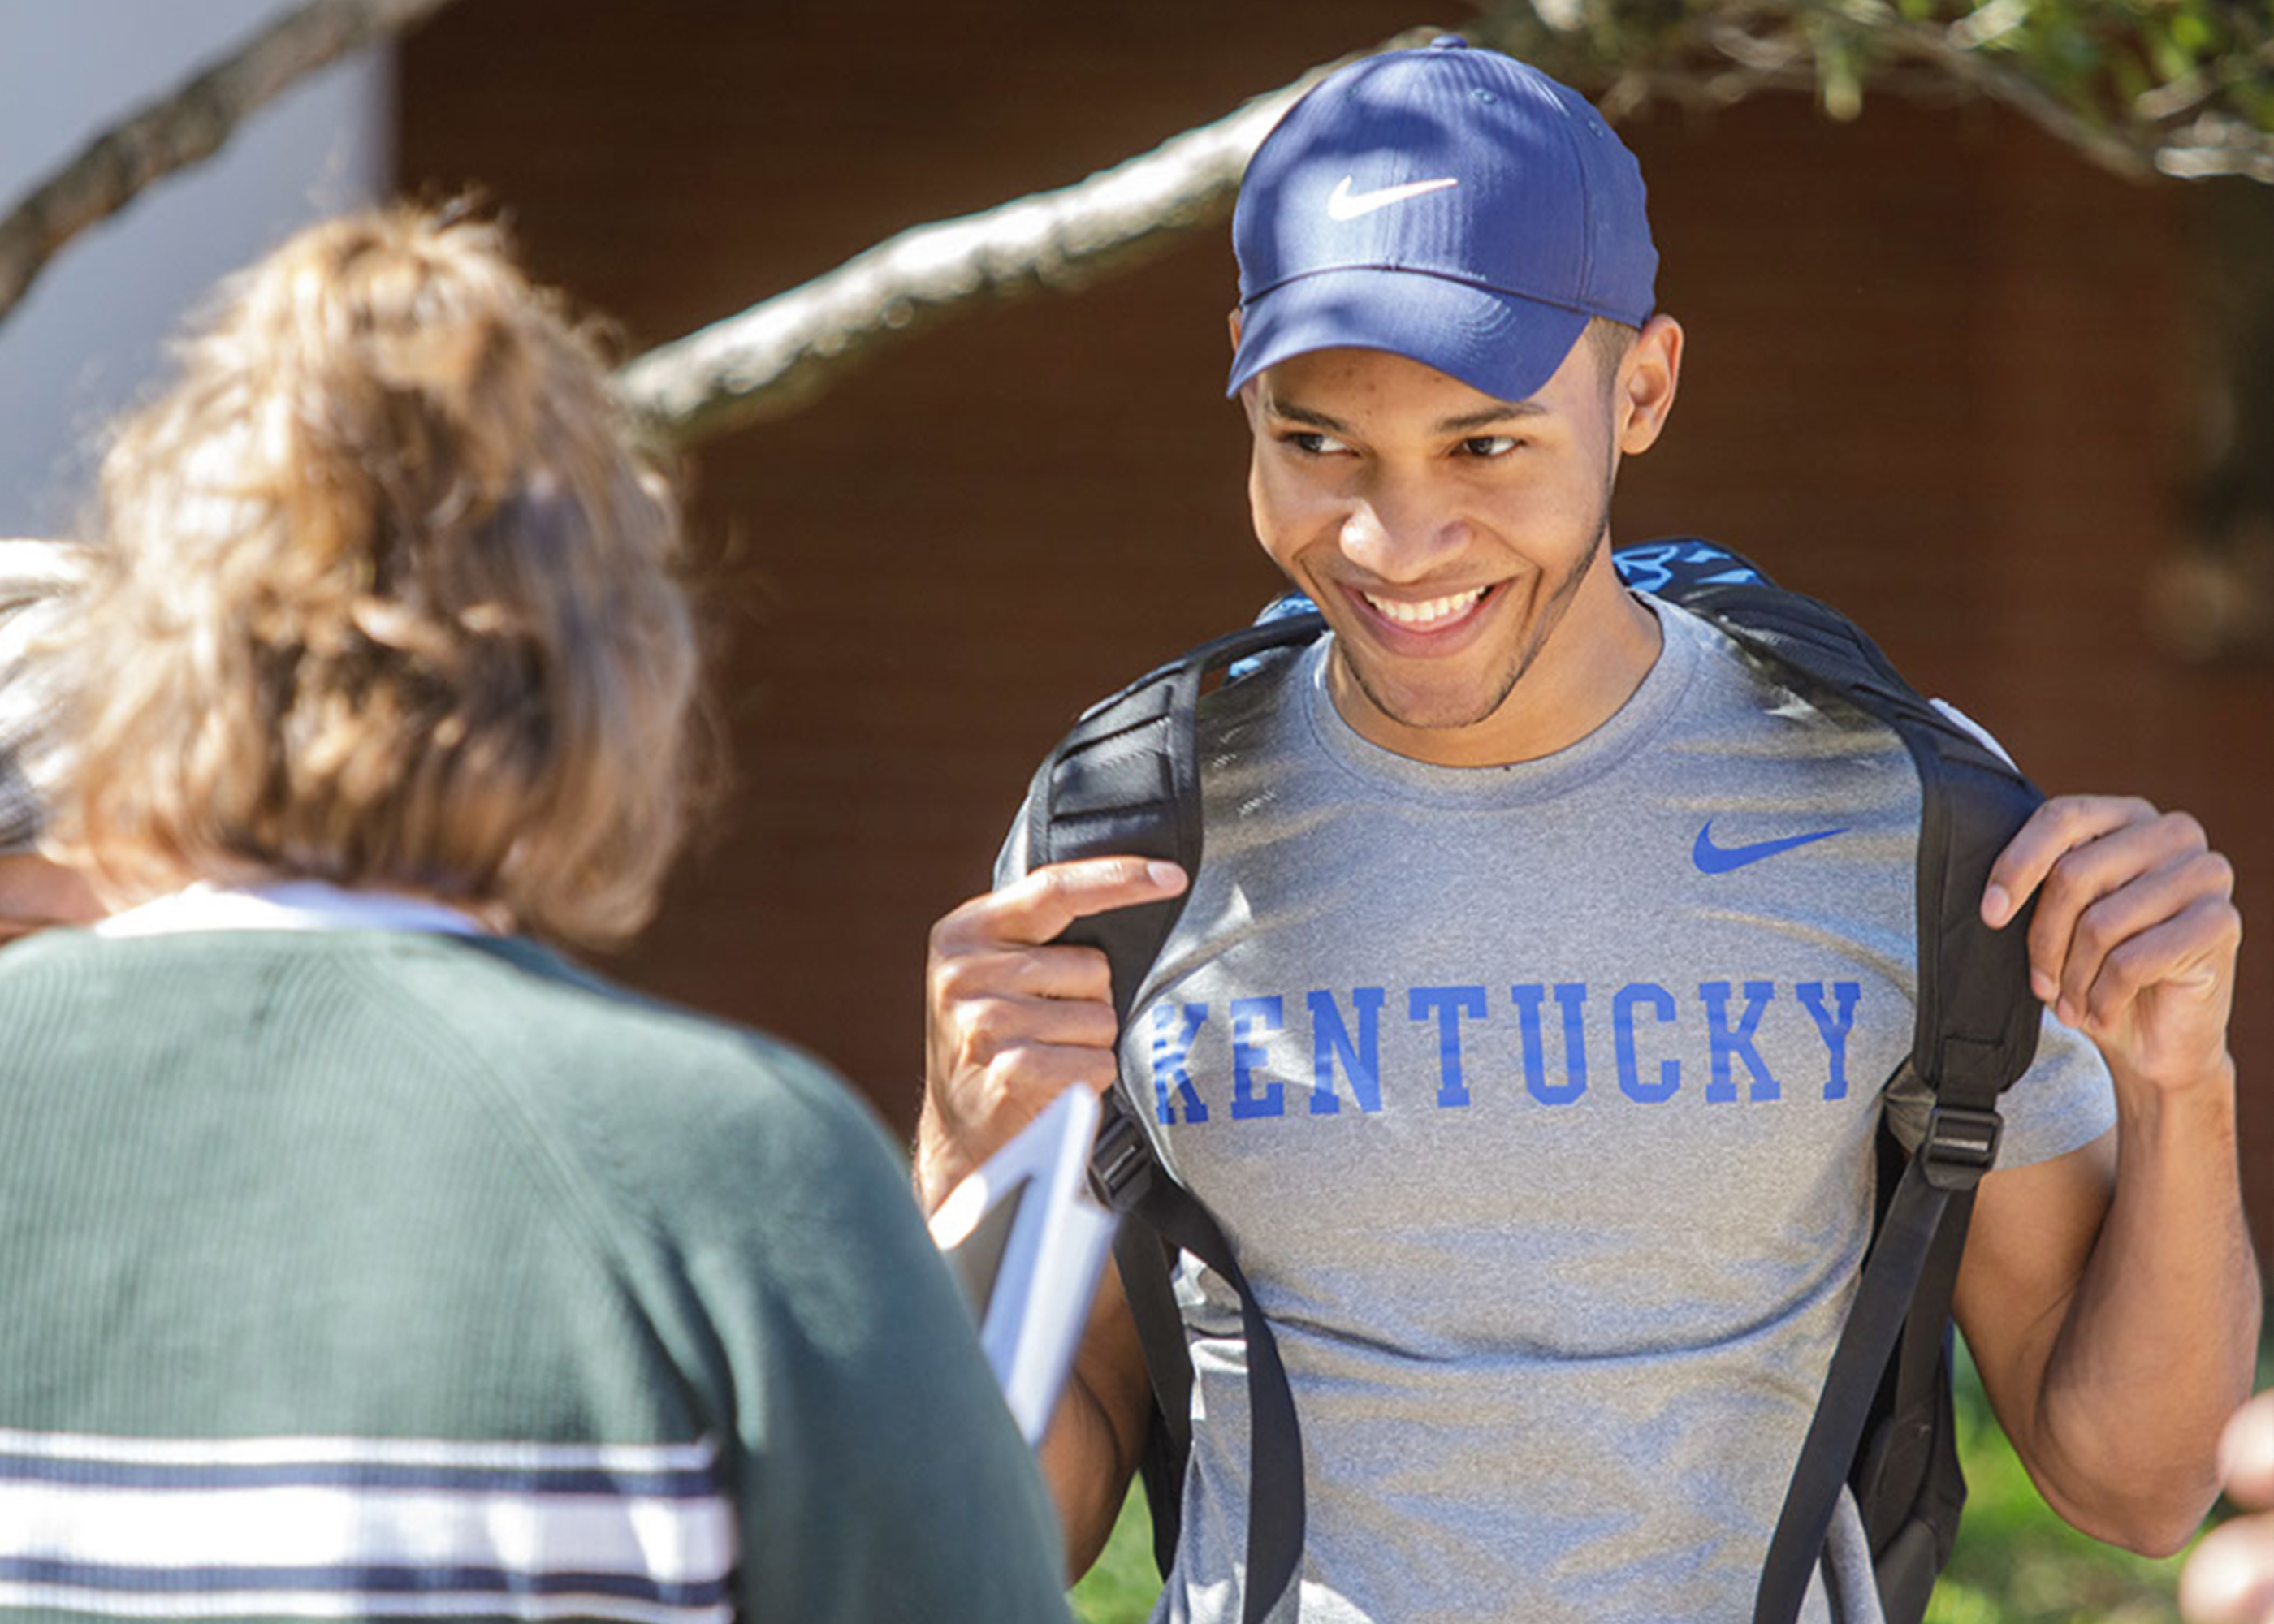 photograph of smiling student wearing a Kentucky tee shirt.